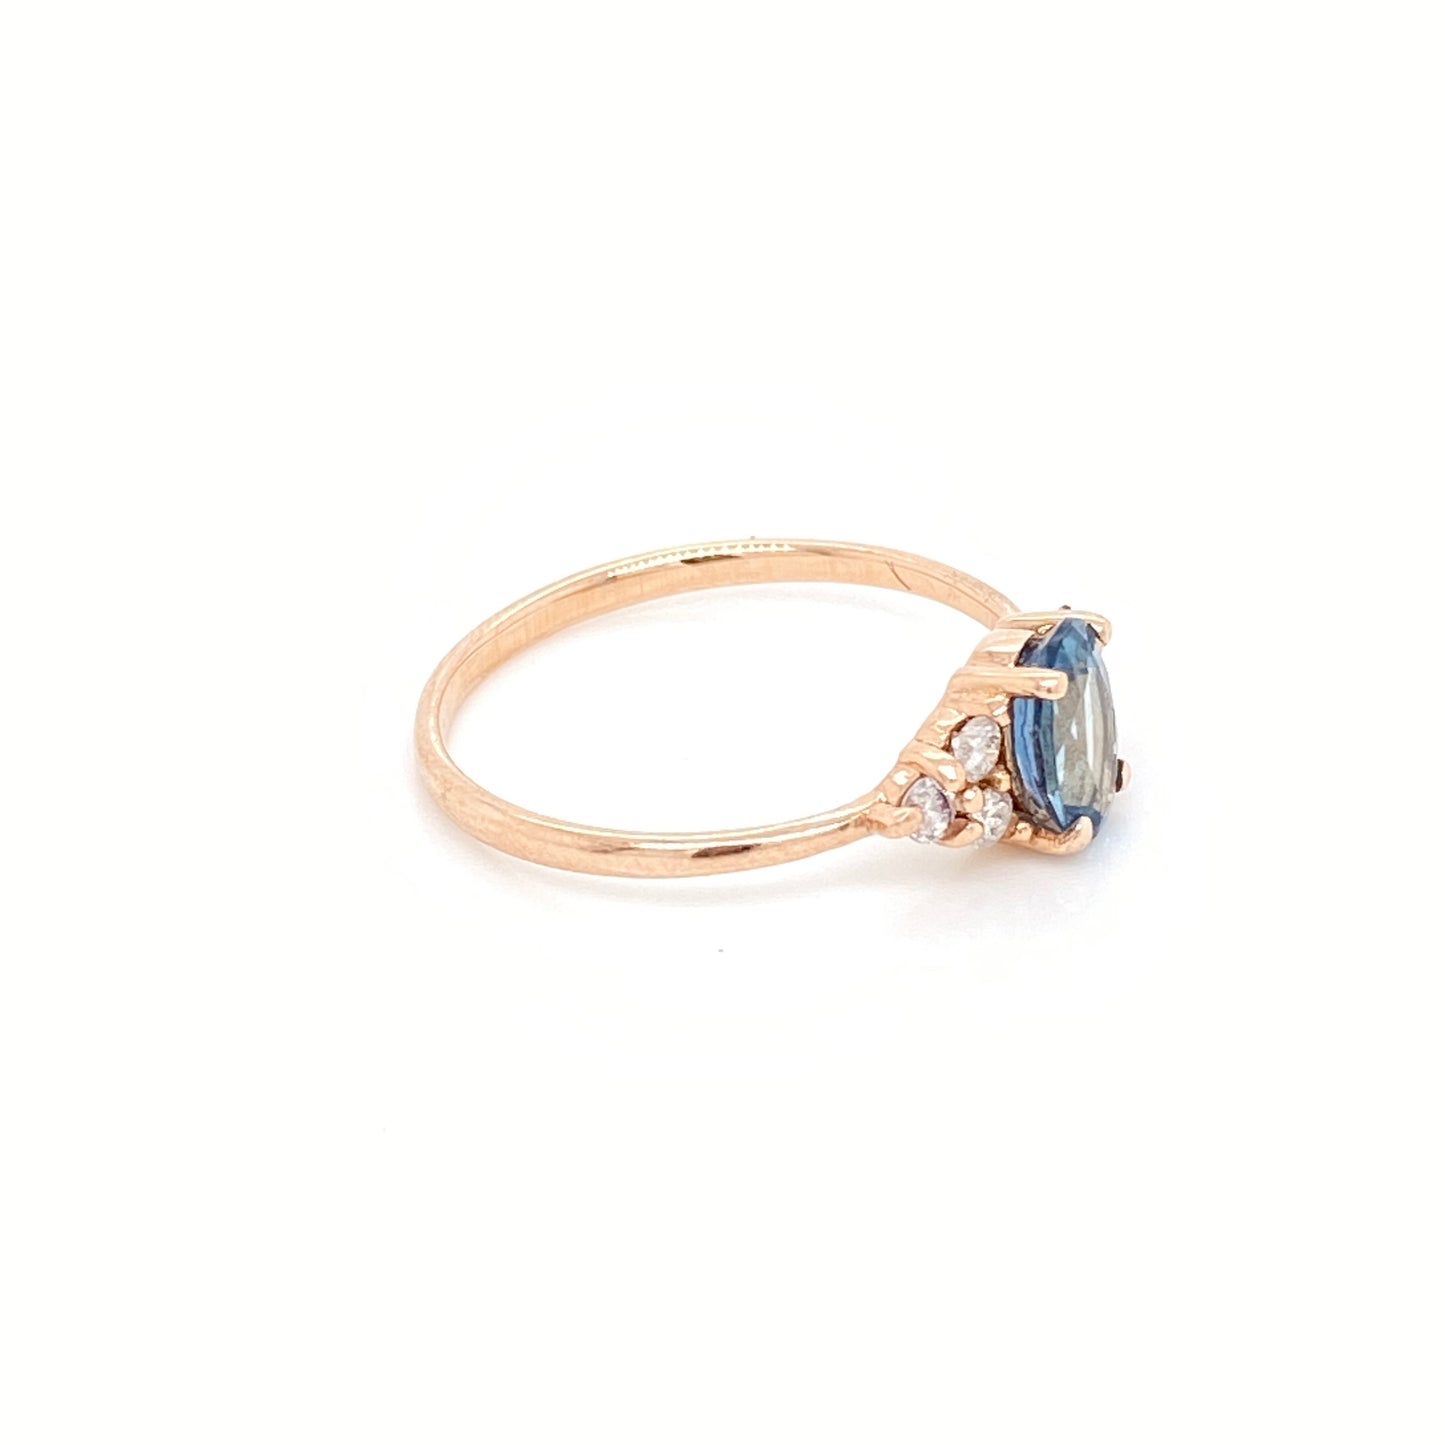 Intense blue Aquamarine ring with Rhodolite and Diamonds